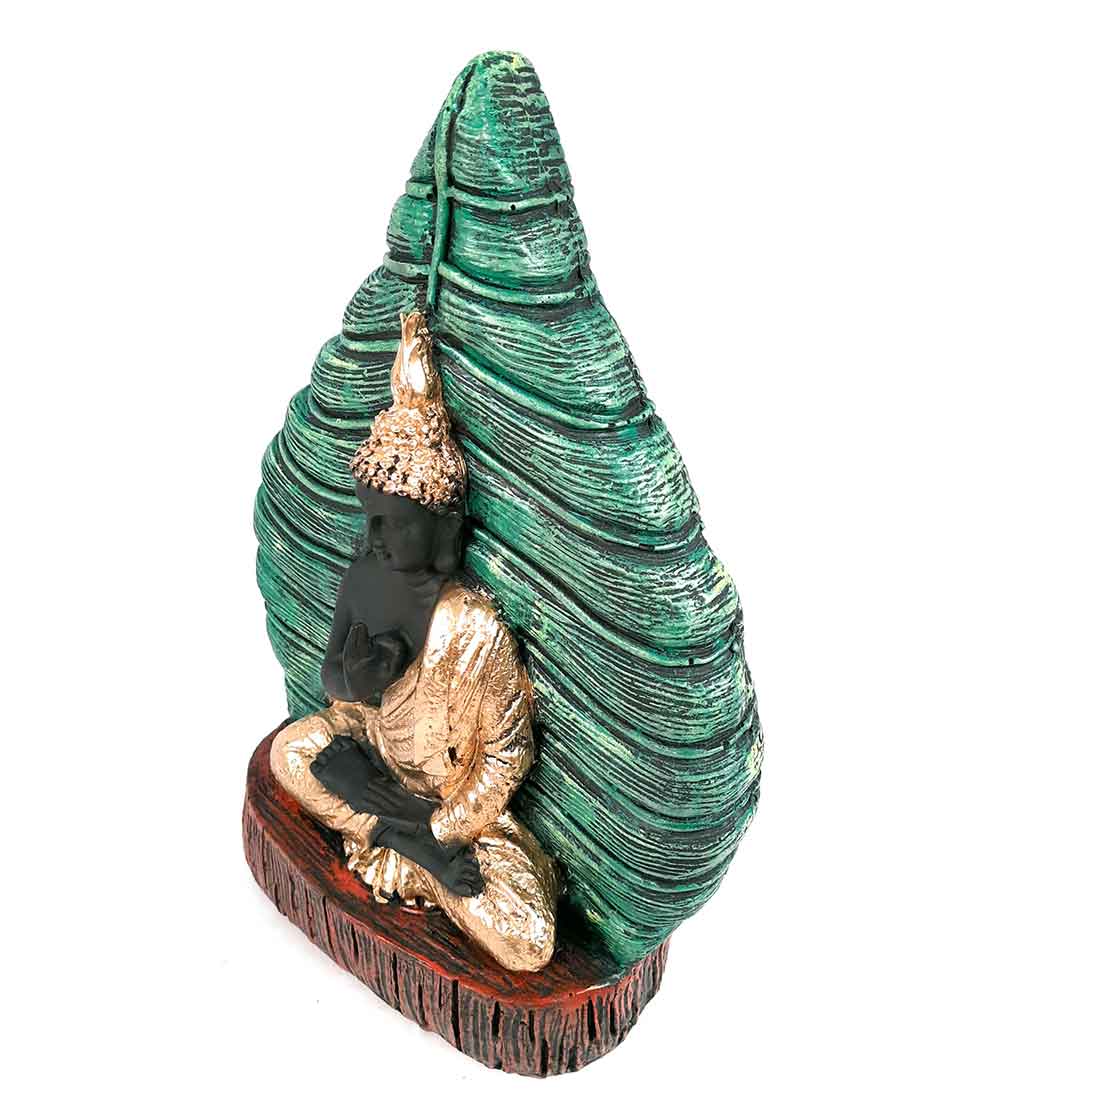 Meditating Buddha Showpiece - for Home Decor & Gifts -Apkamart #Style_Style3